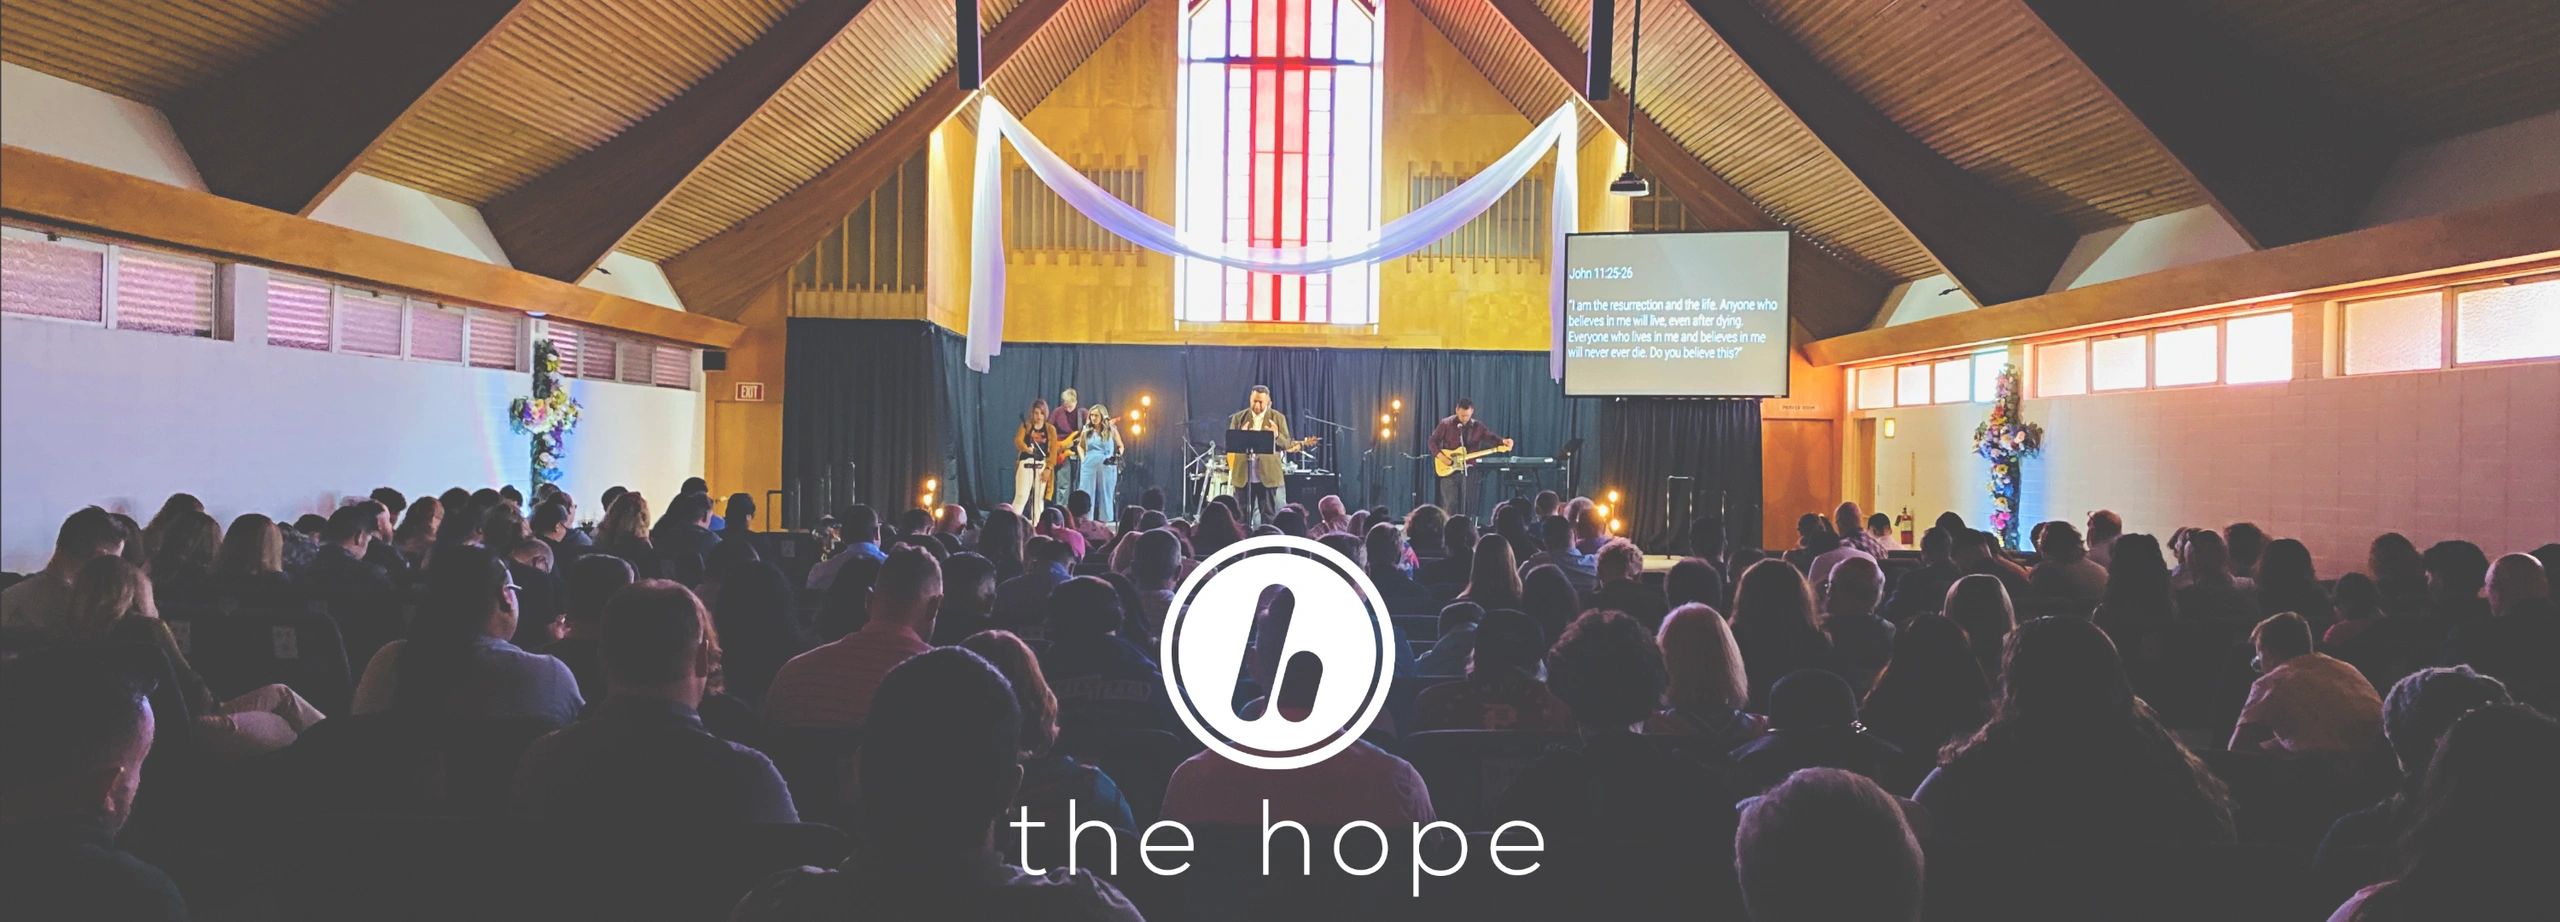 The Hope - Church